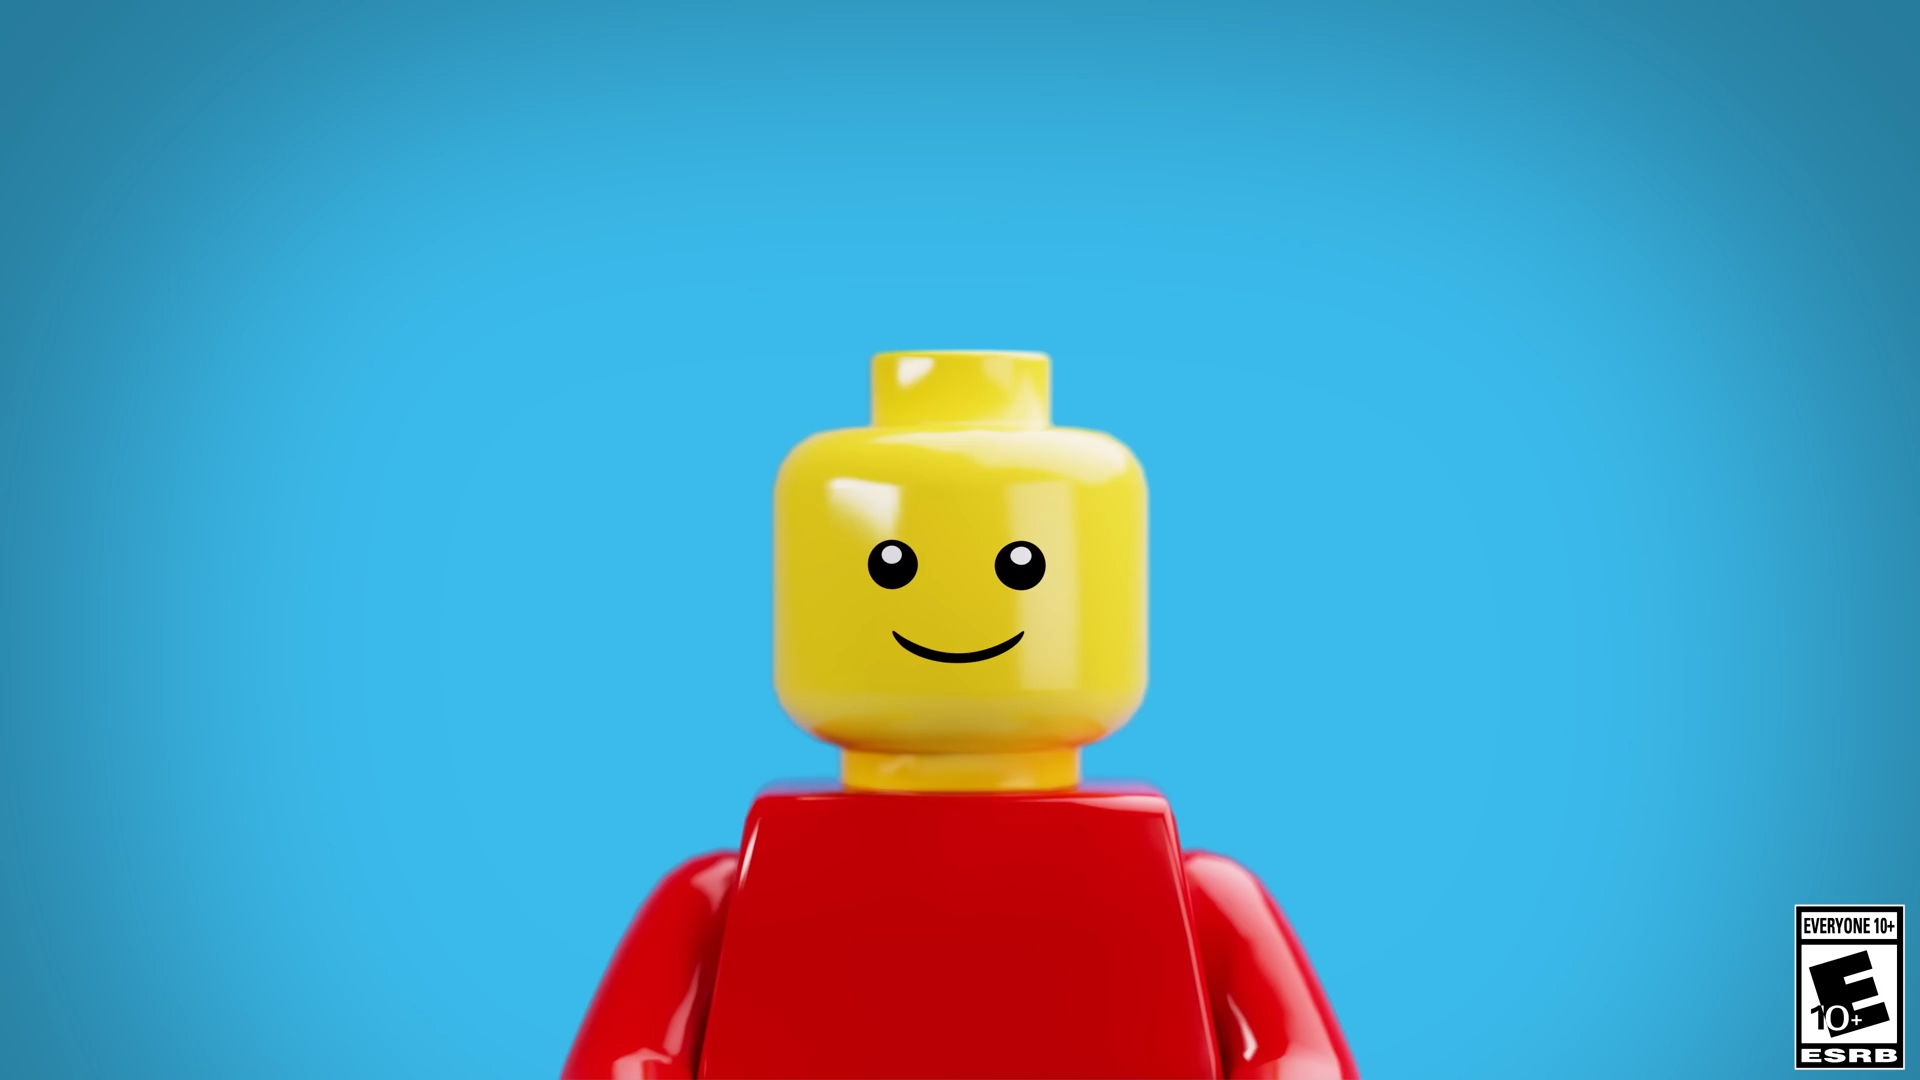 LEGO 2K Drive sees players create and race custom creations